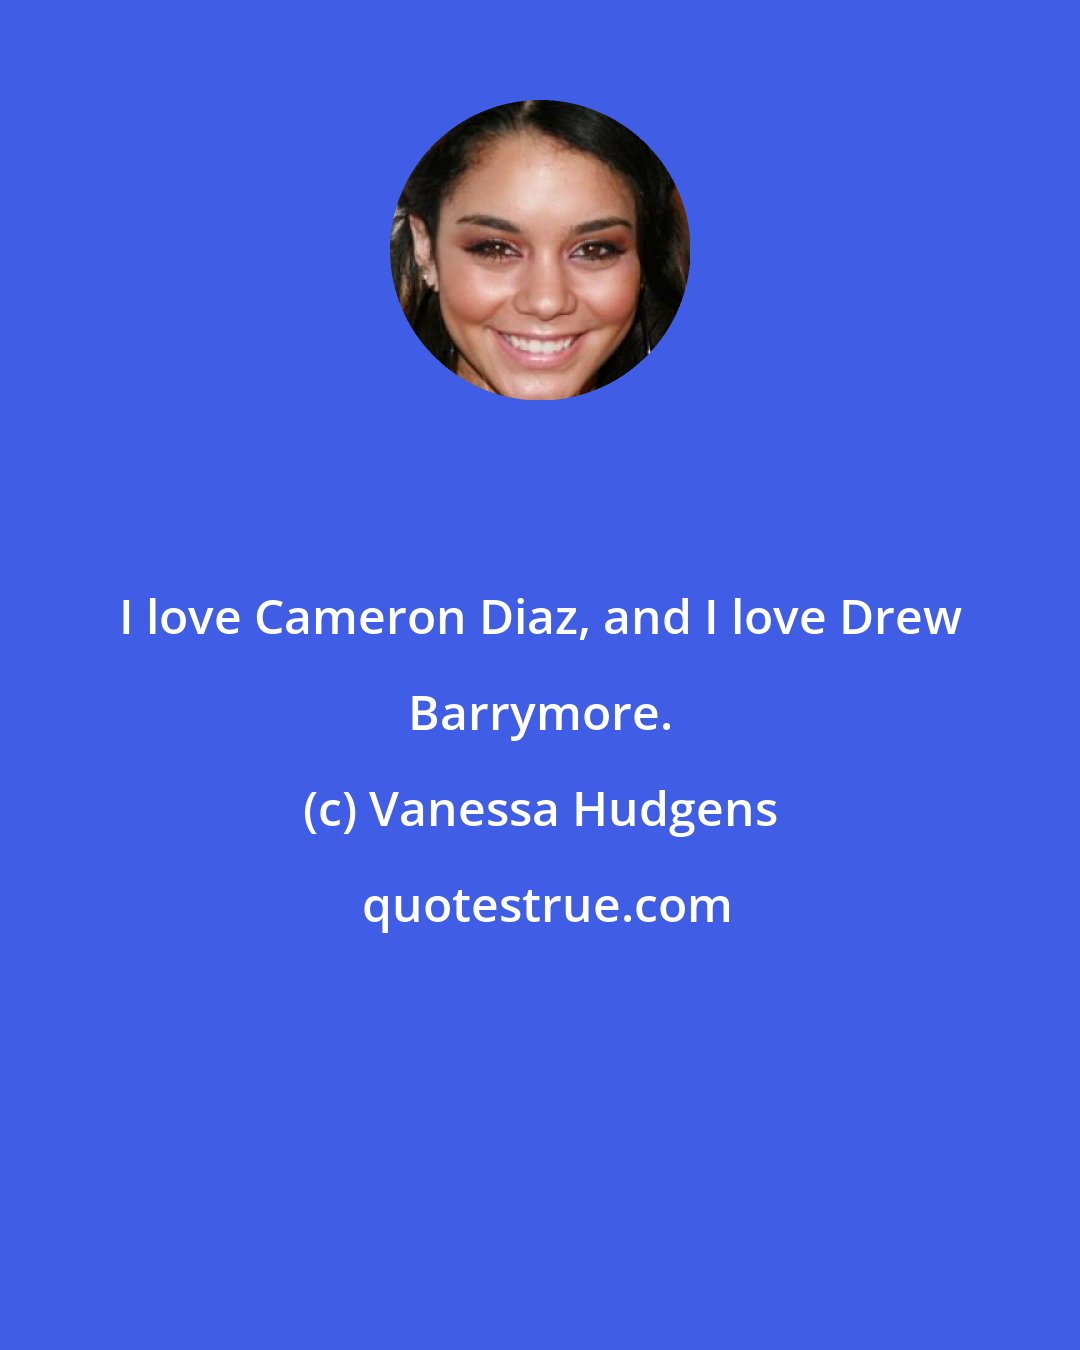 Vanessa Hudgens: I love Cameron Diaz, and I love Drew Barrymore.